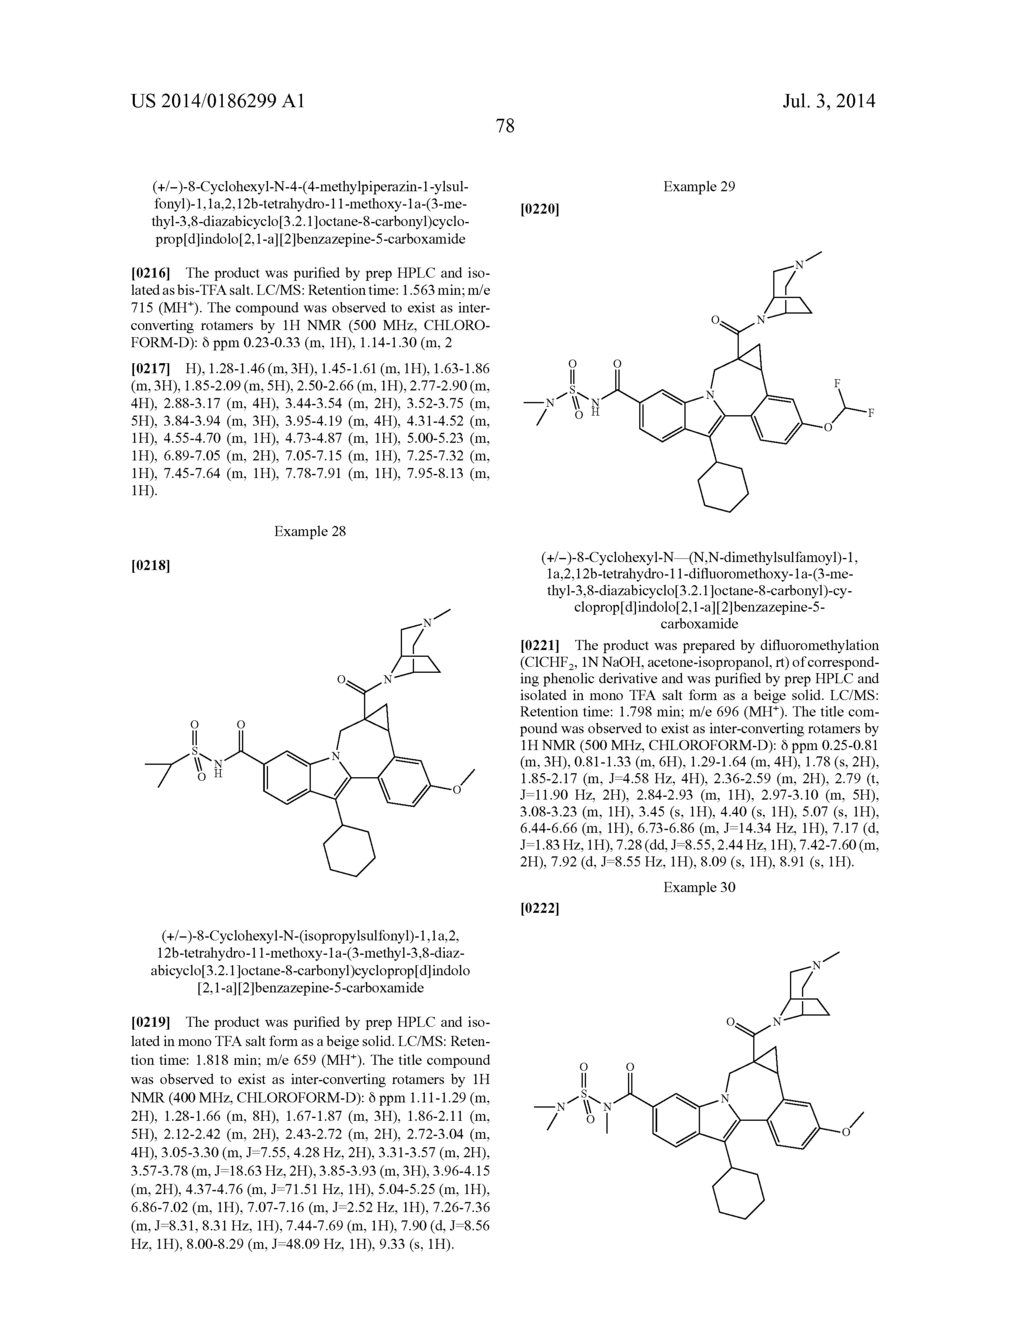 Cyclopropyl Fused Indolobenzazepine HCV NS5B Inhibitors - diagram, schematic, and image 79